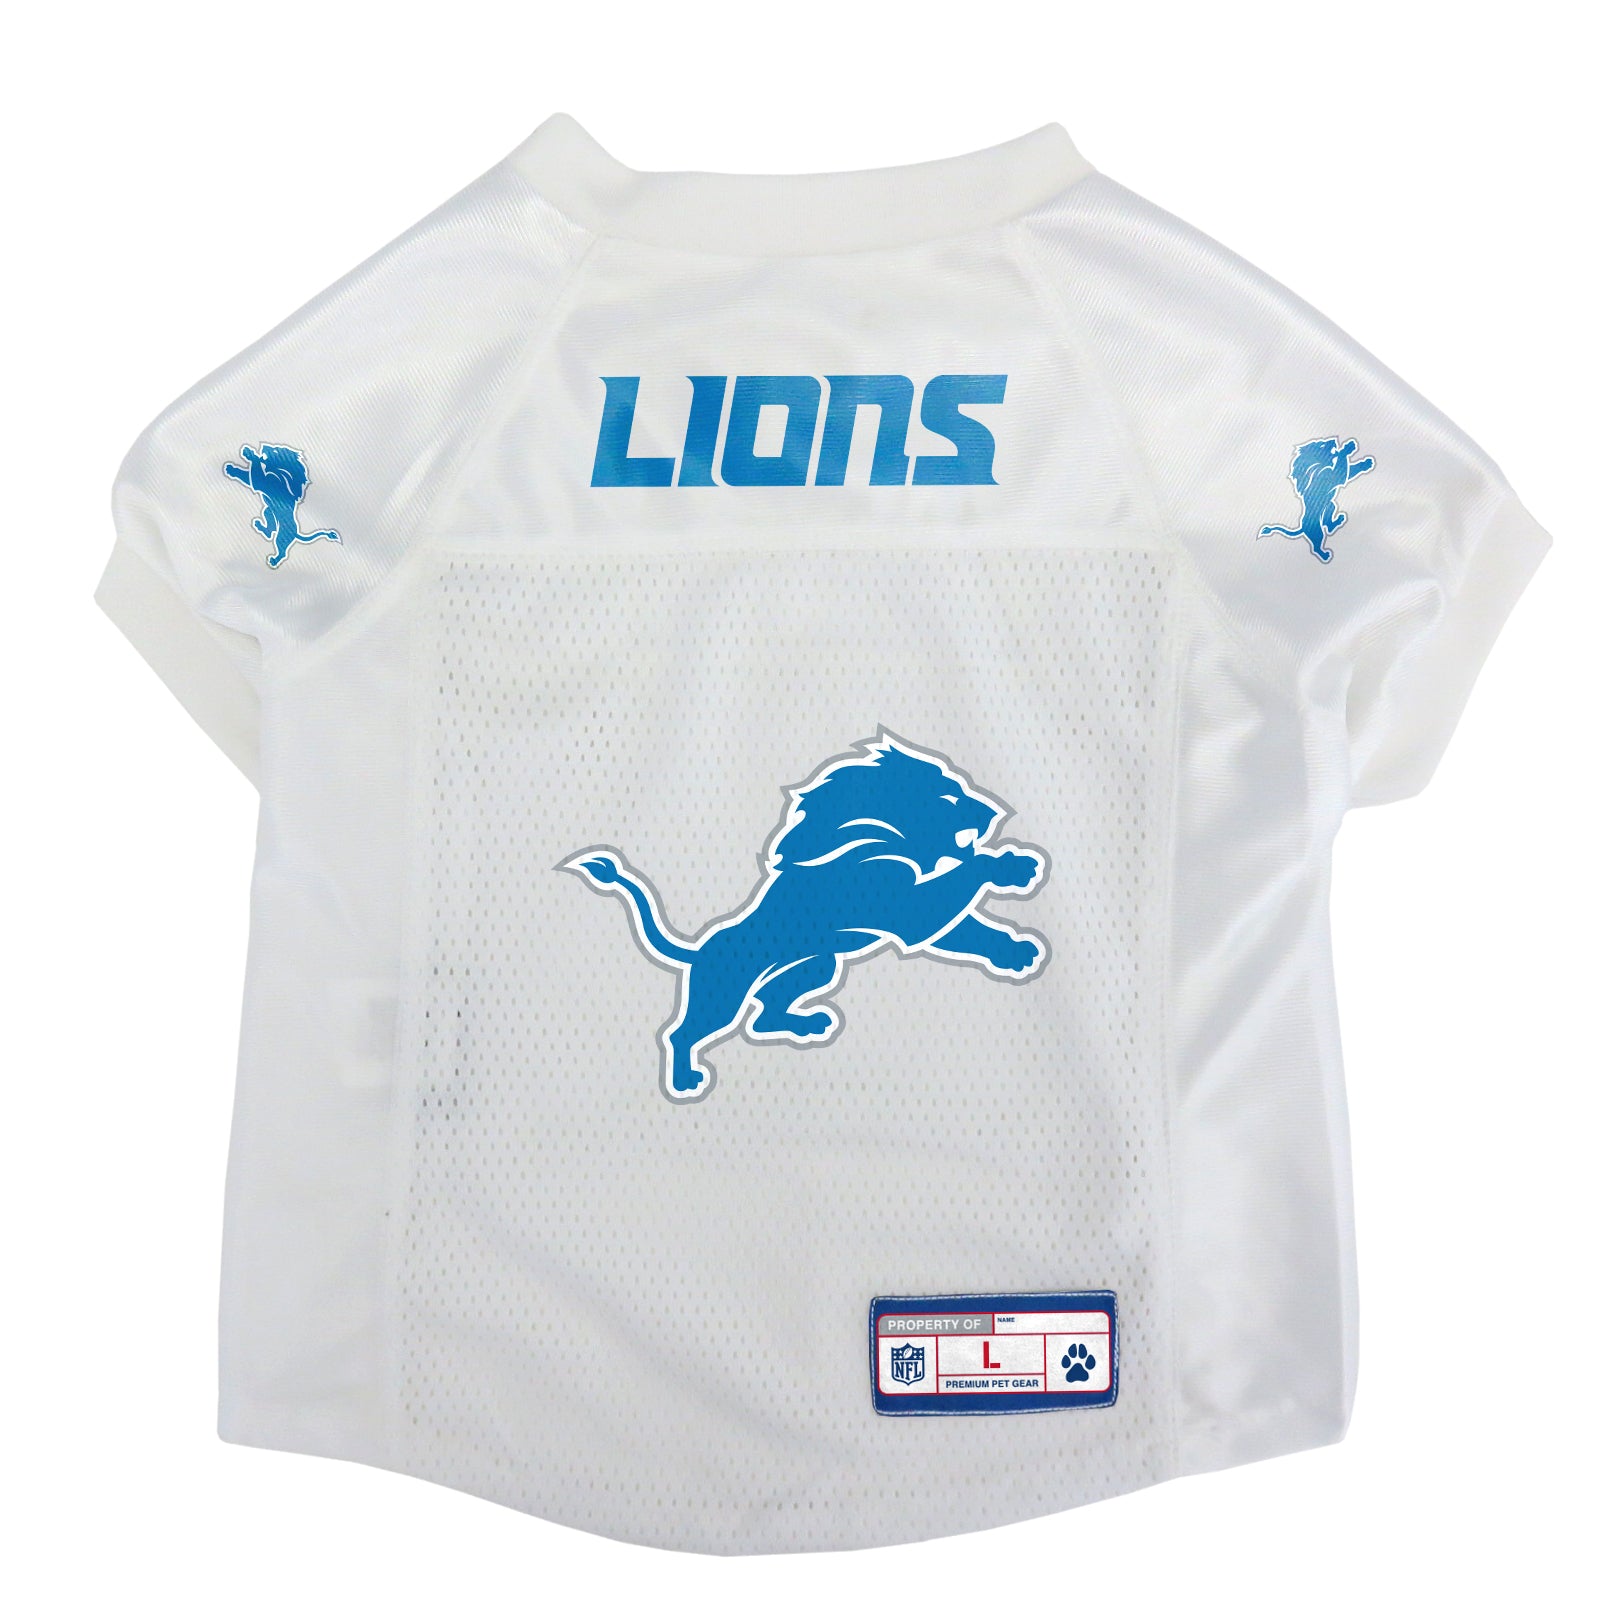 lions dog jersey